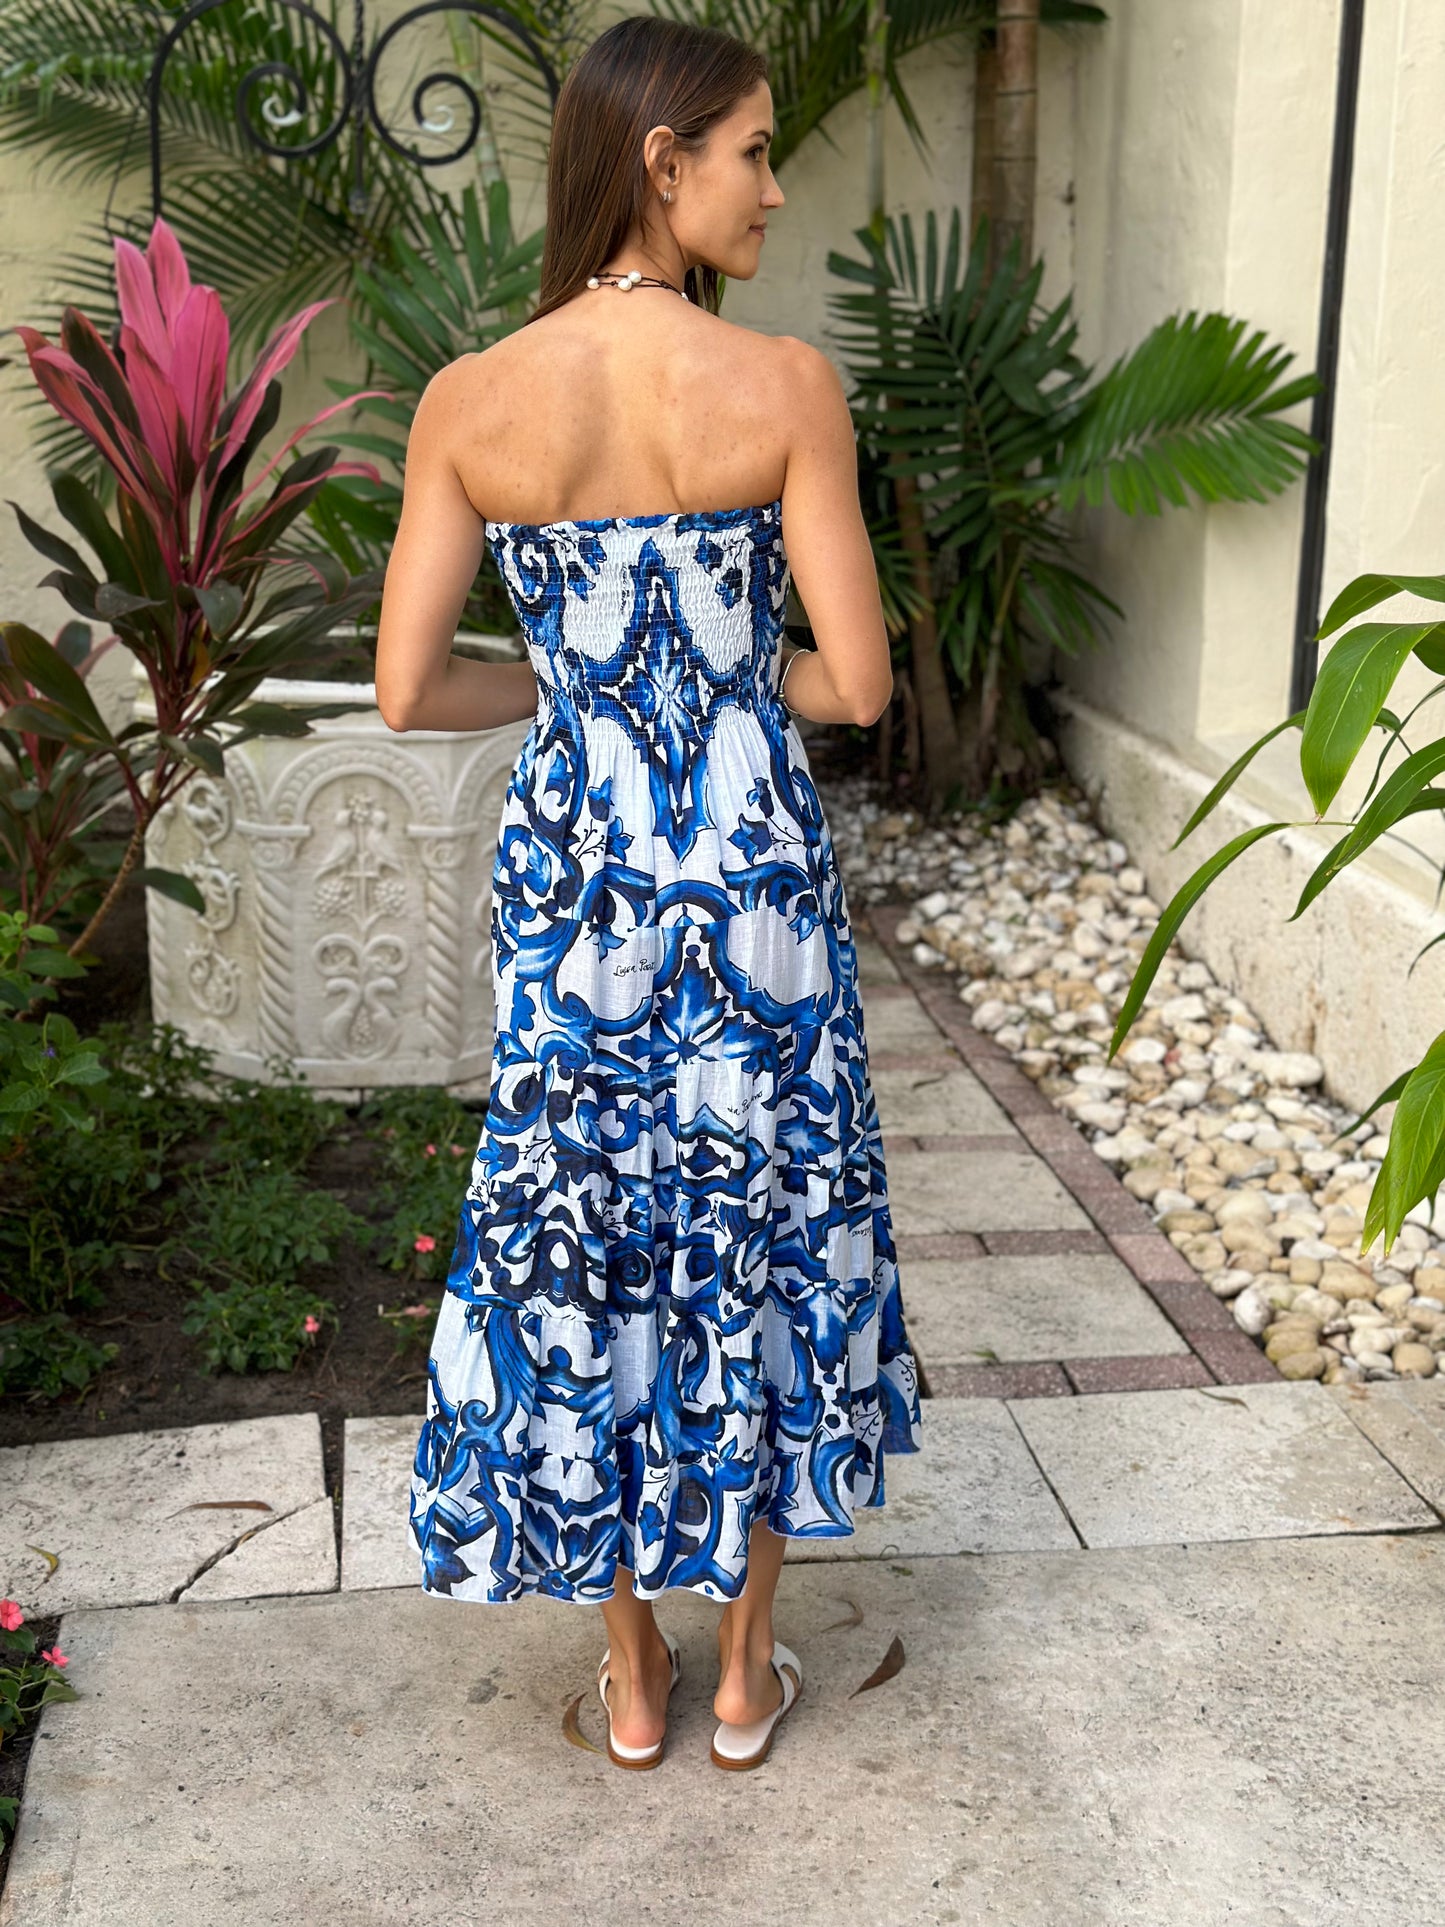 Positano Totarone Long Dress - Premium Dresses from Marina St. Barth - Just $495! Shop now at Marina St Barth